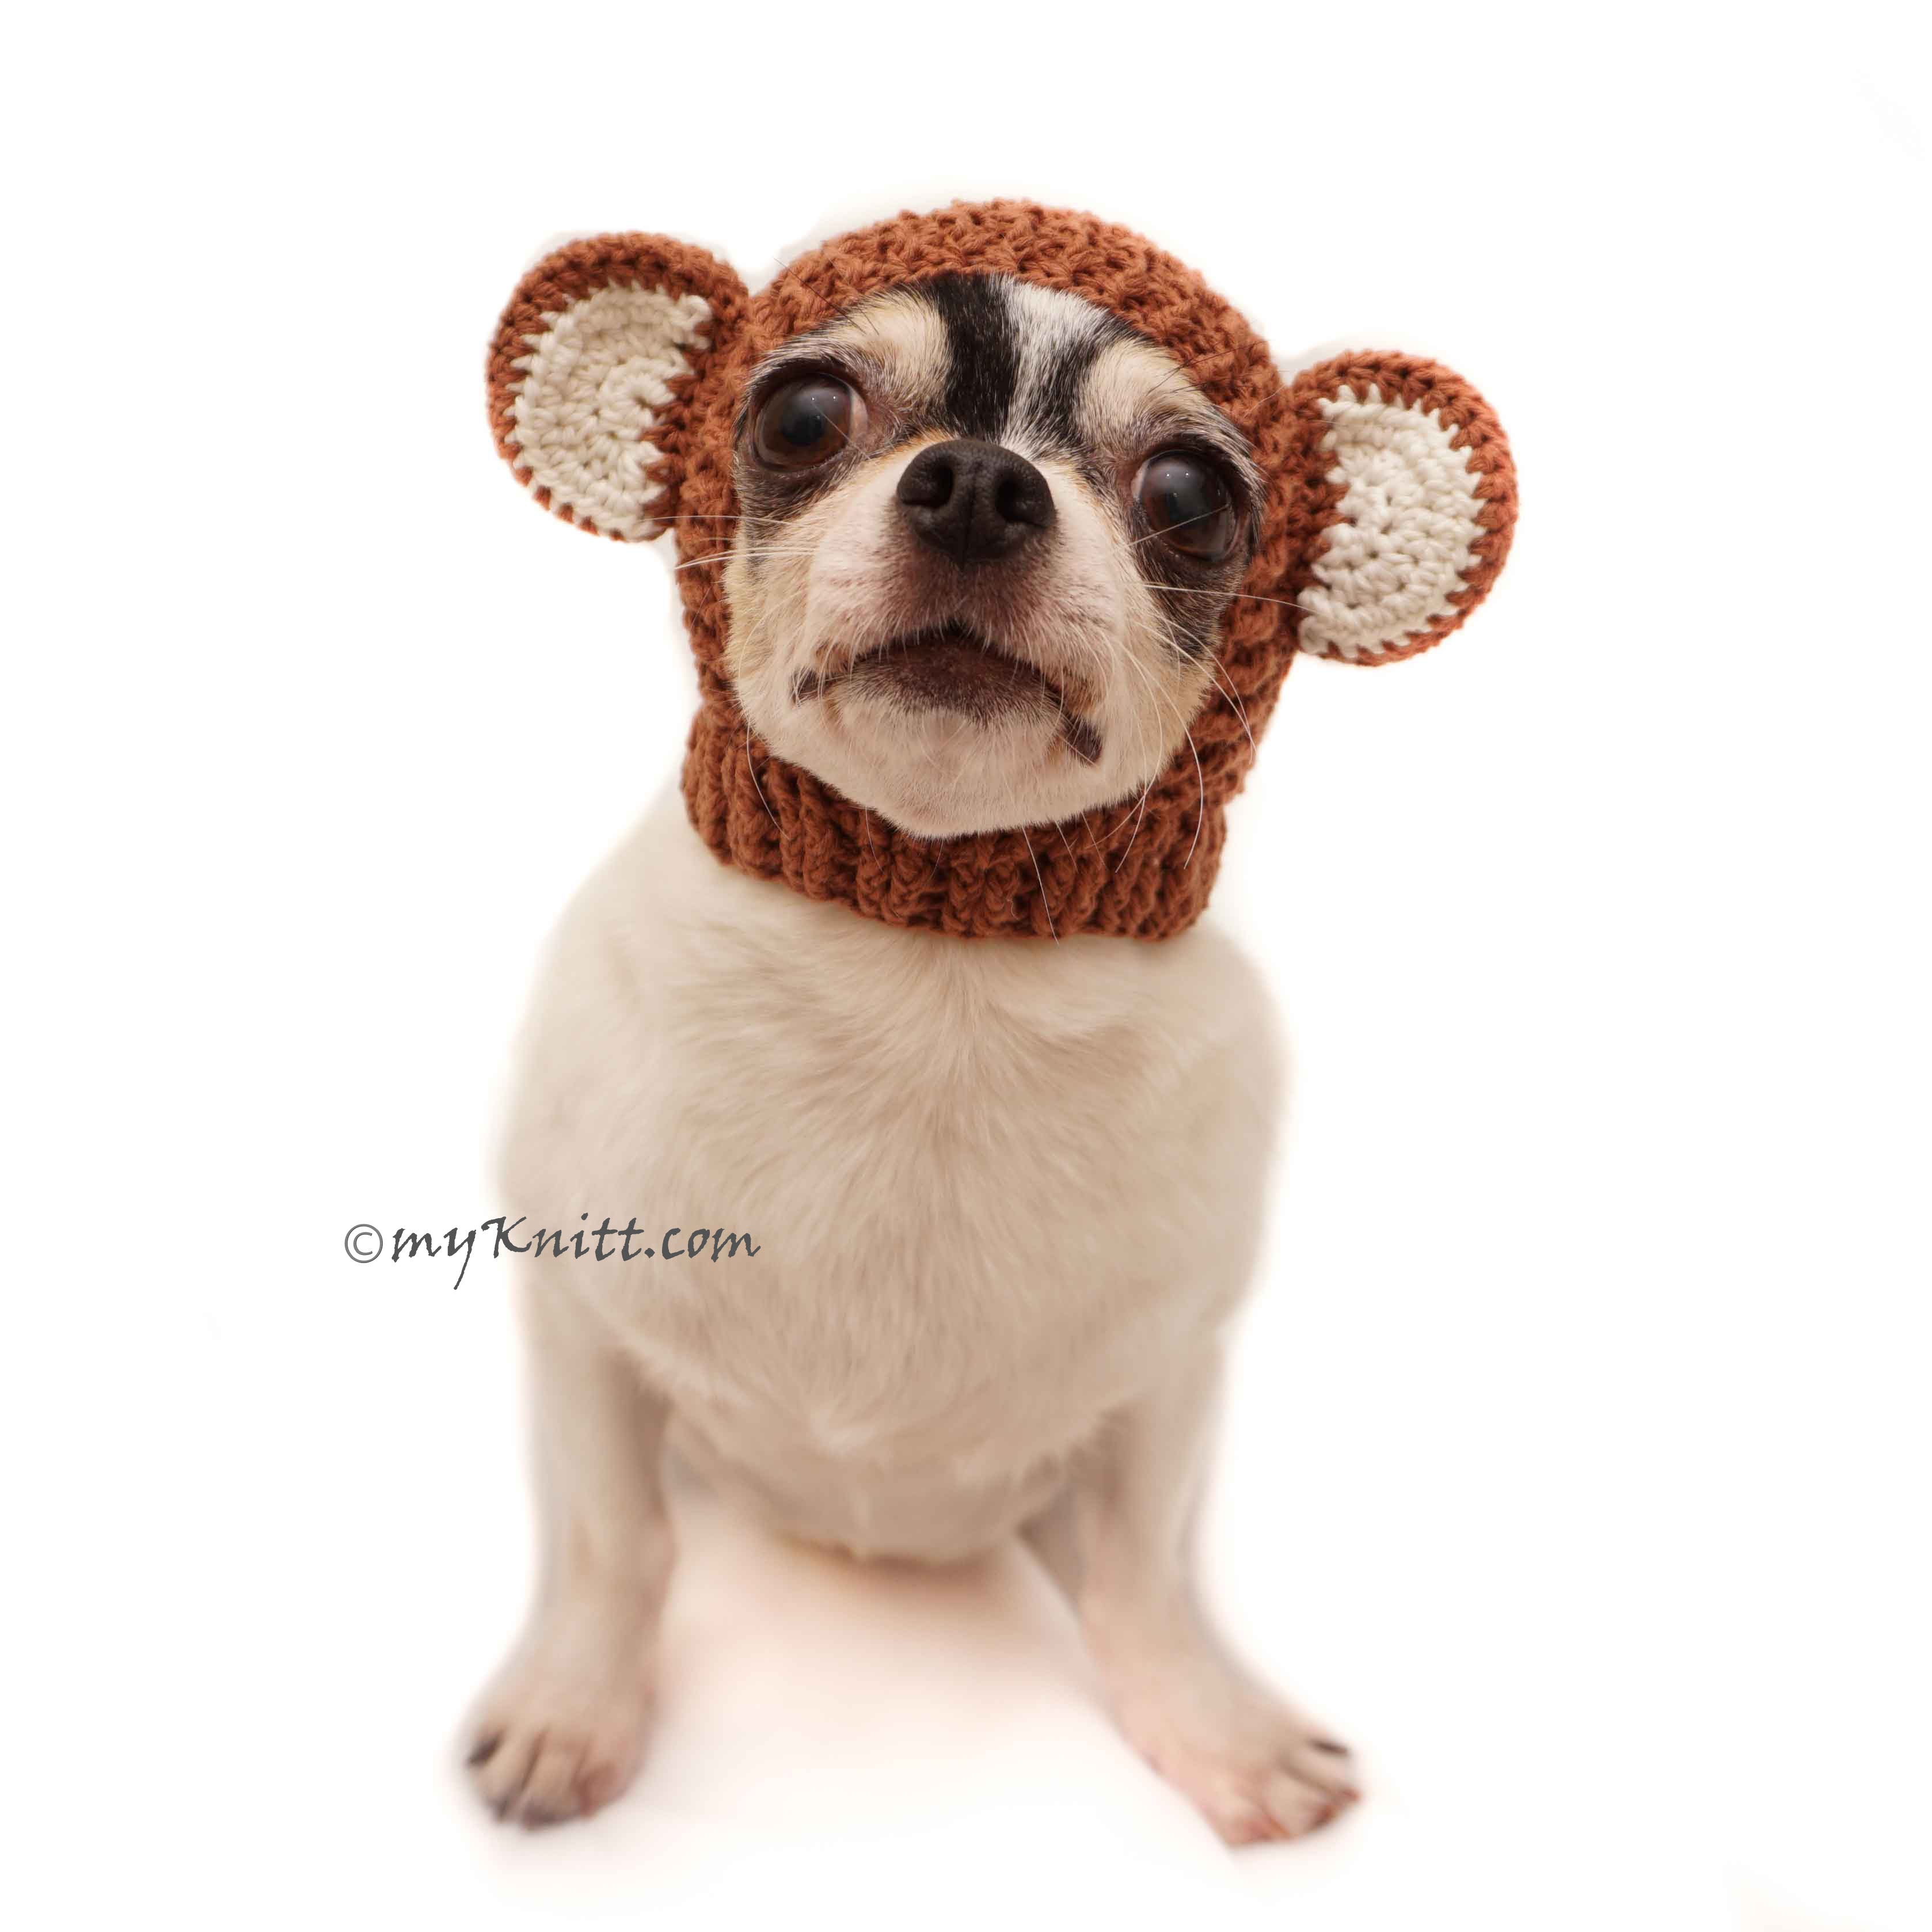 Monkey Dog Hats, Crochet Dog Hat, Cat Hats DB8 by Myknitt